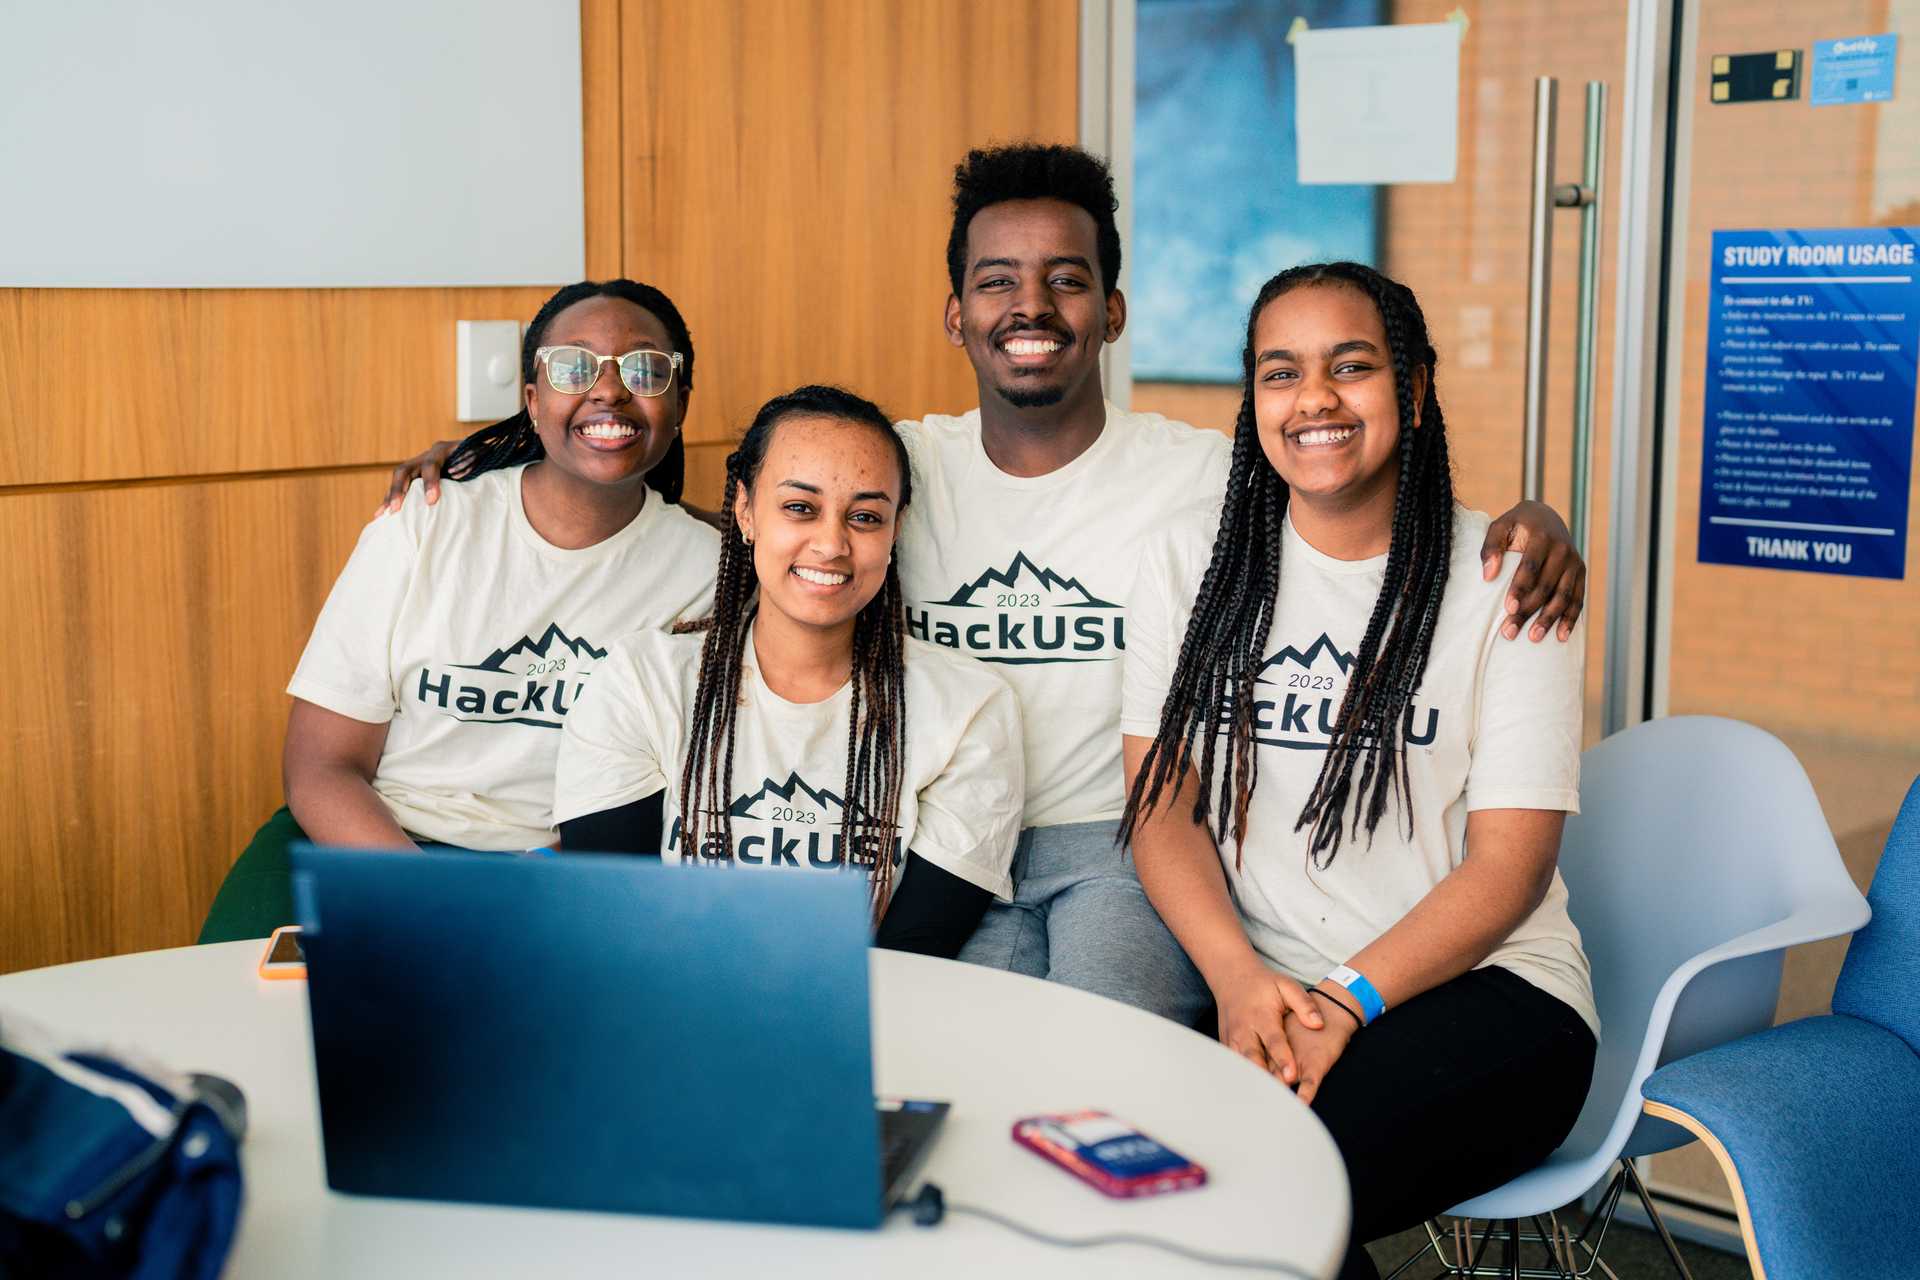 A group of students wearing HackUSU shirts